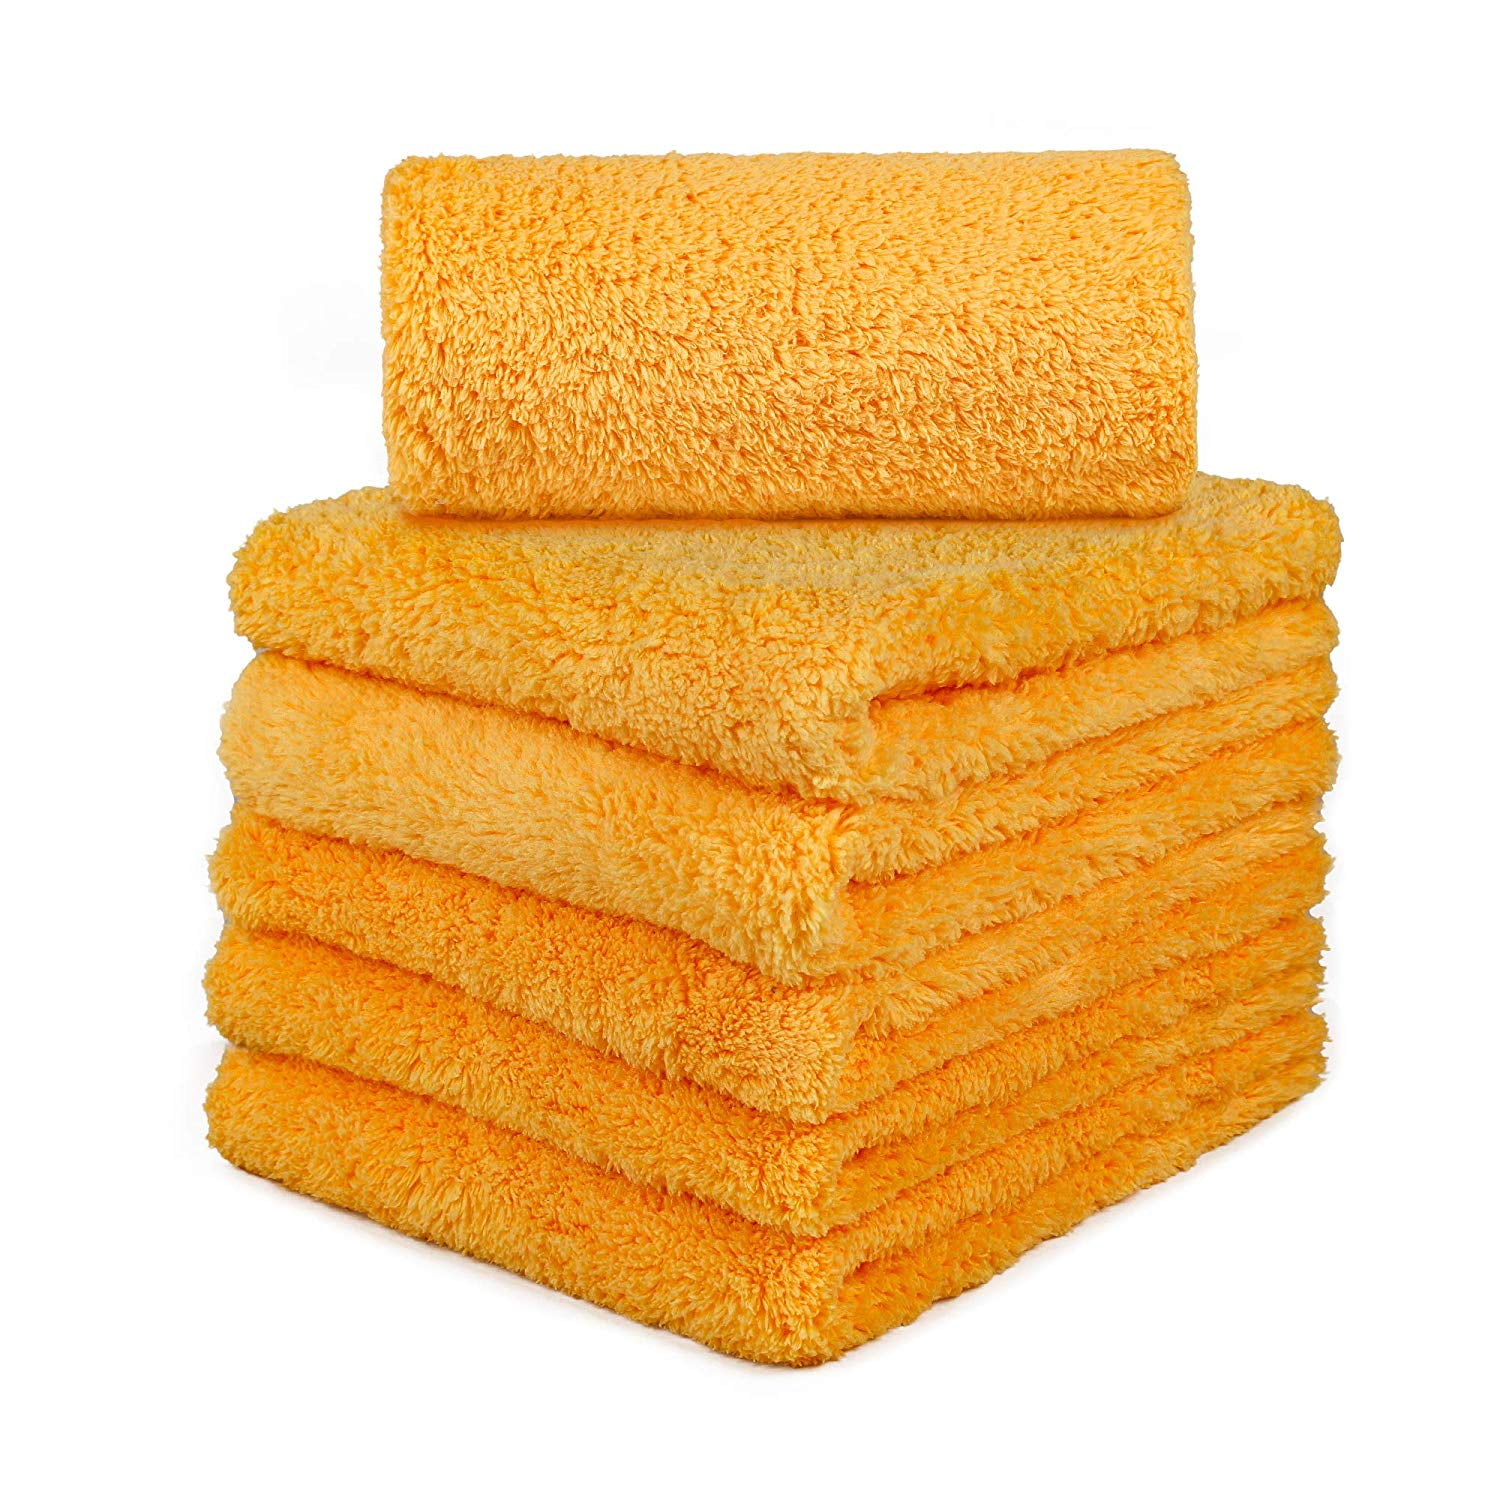 SOFTBATFY Plush Edgeless Microfiber Towels Cloth for Cars Car Drying Wash Detailing Buffing Polishing Towel Orange 500 GSM 6 Pack 16 x 16inches 